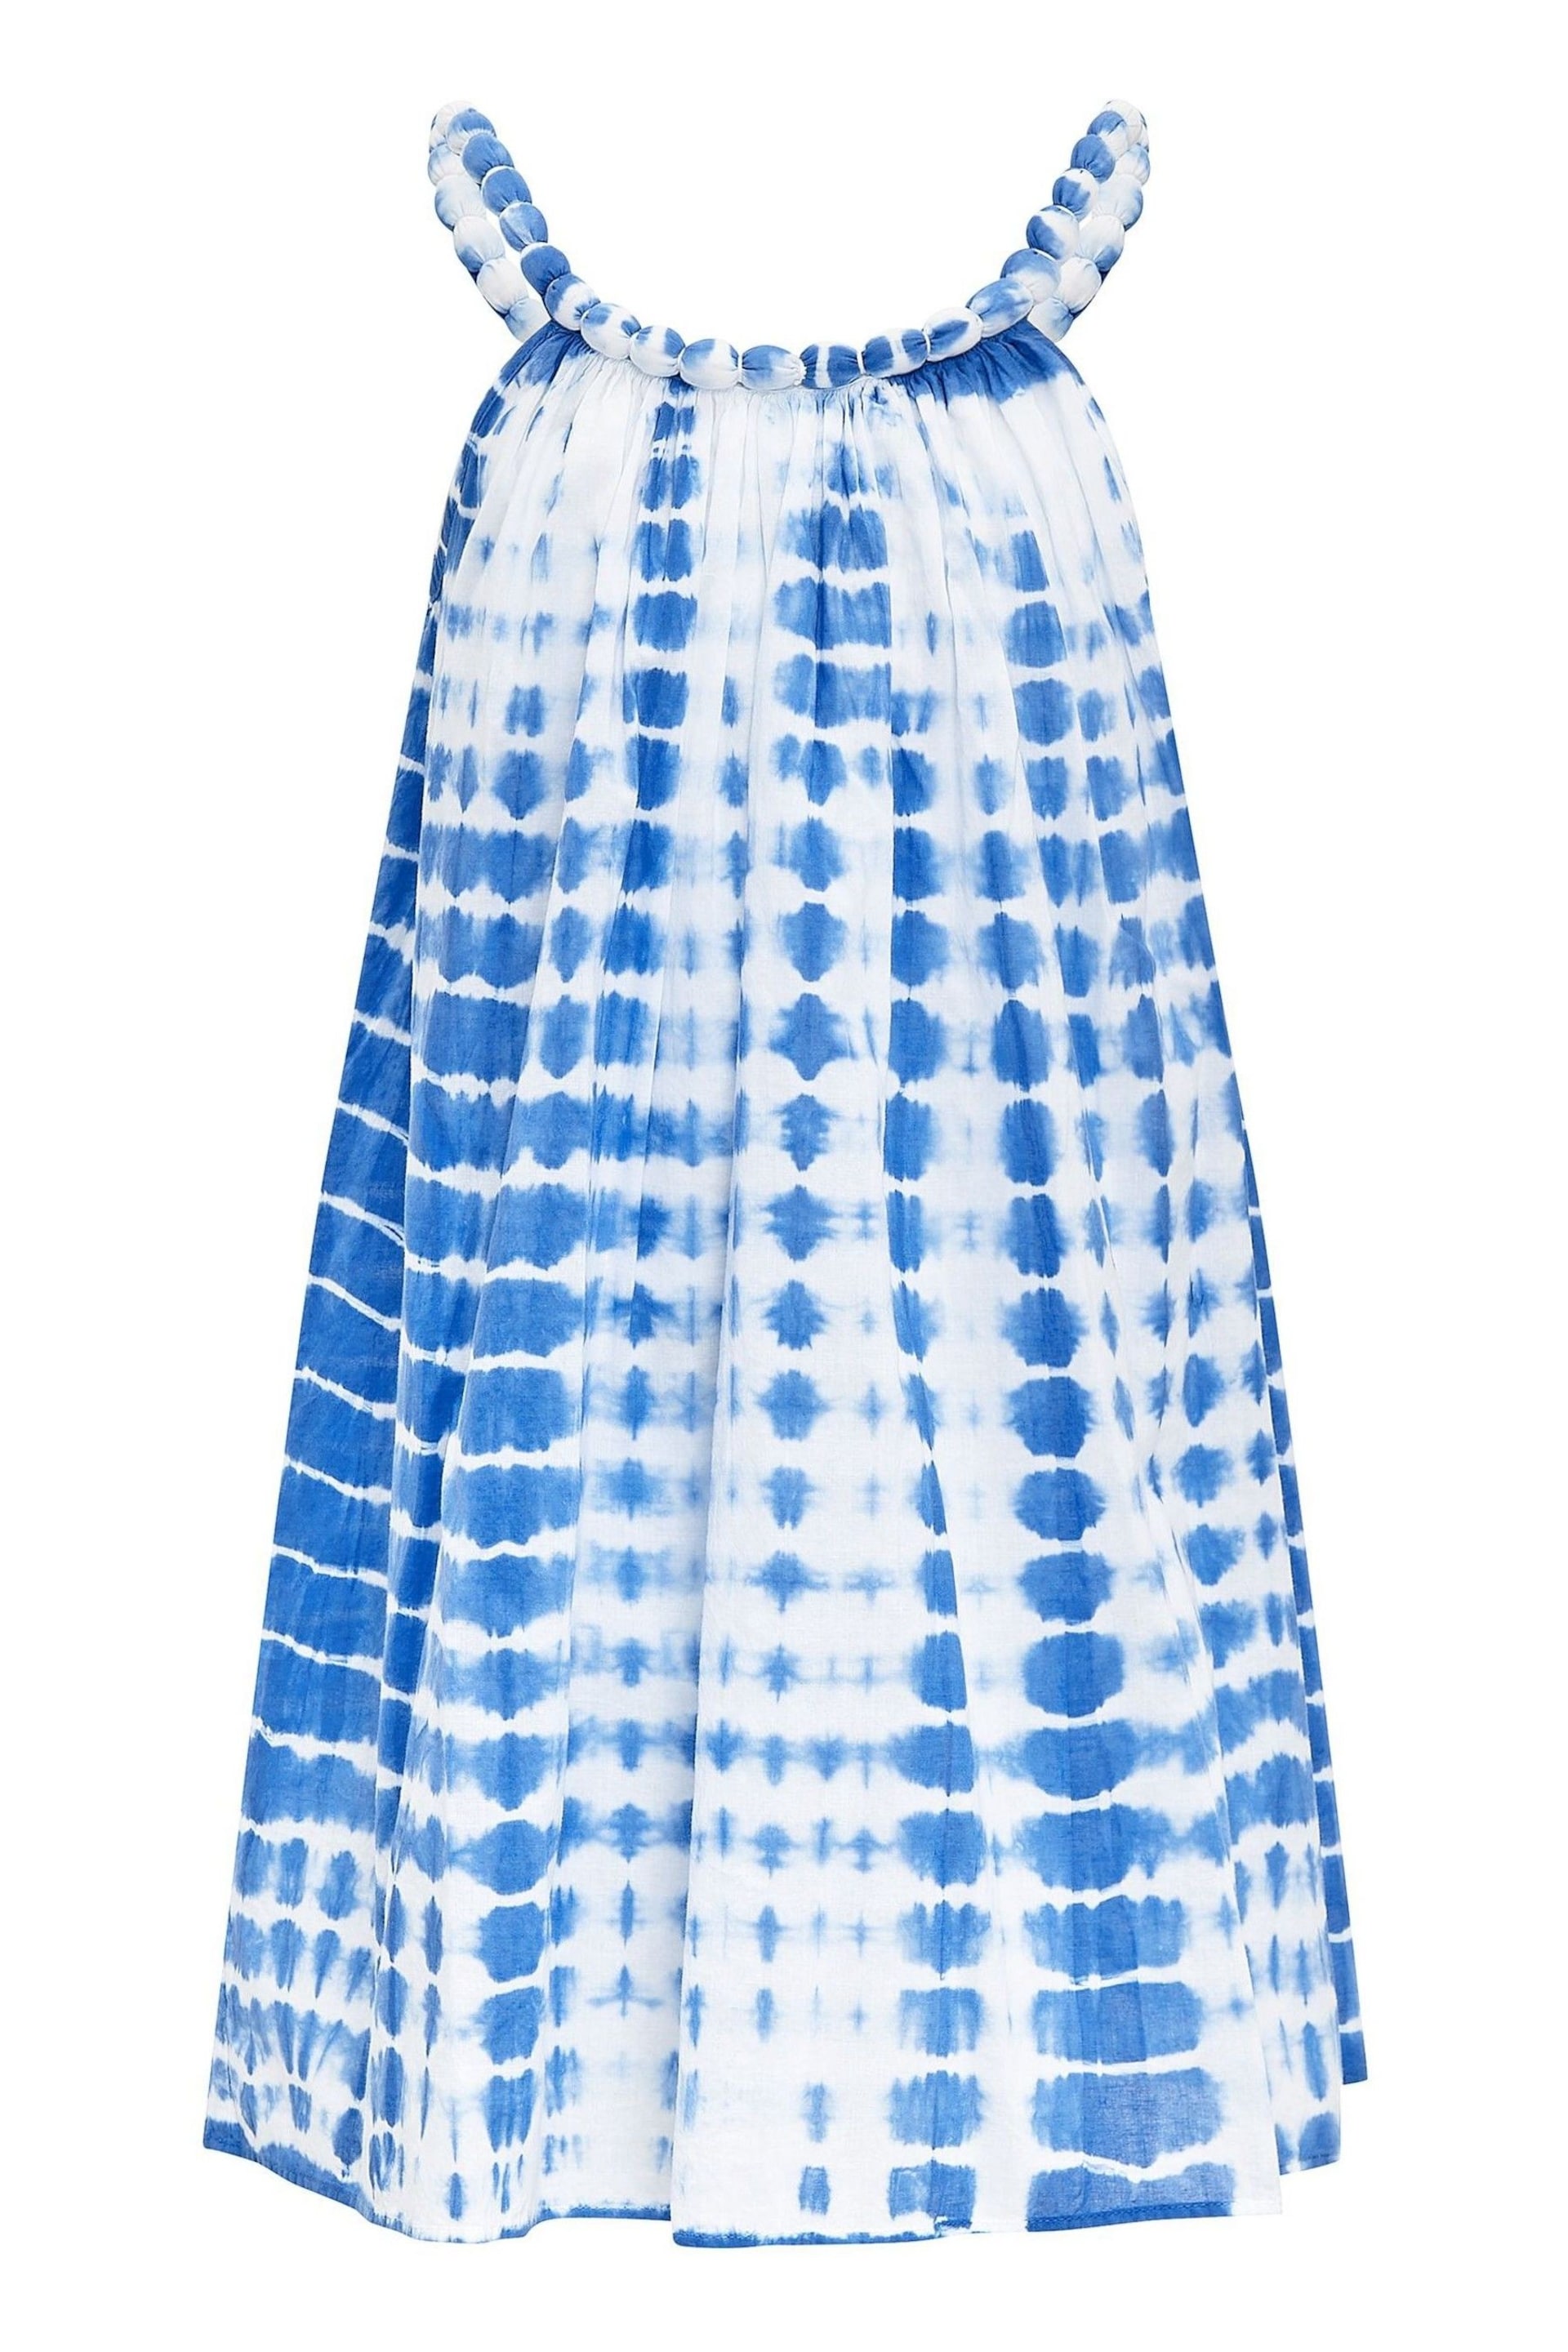 Sunuva Tie Dye Beaded Dress - Image 3 of 3